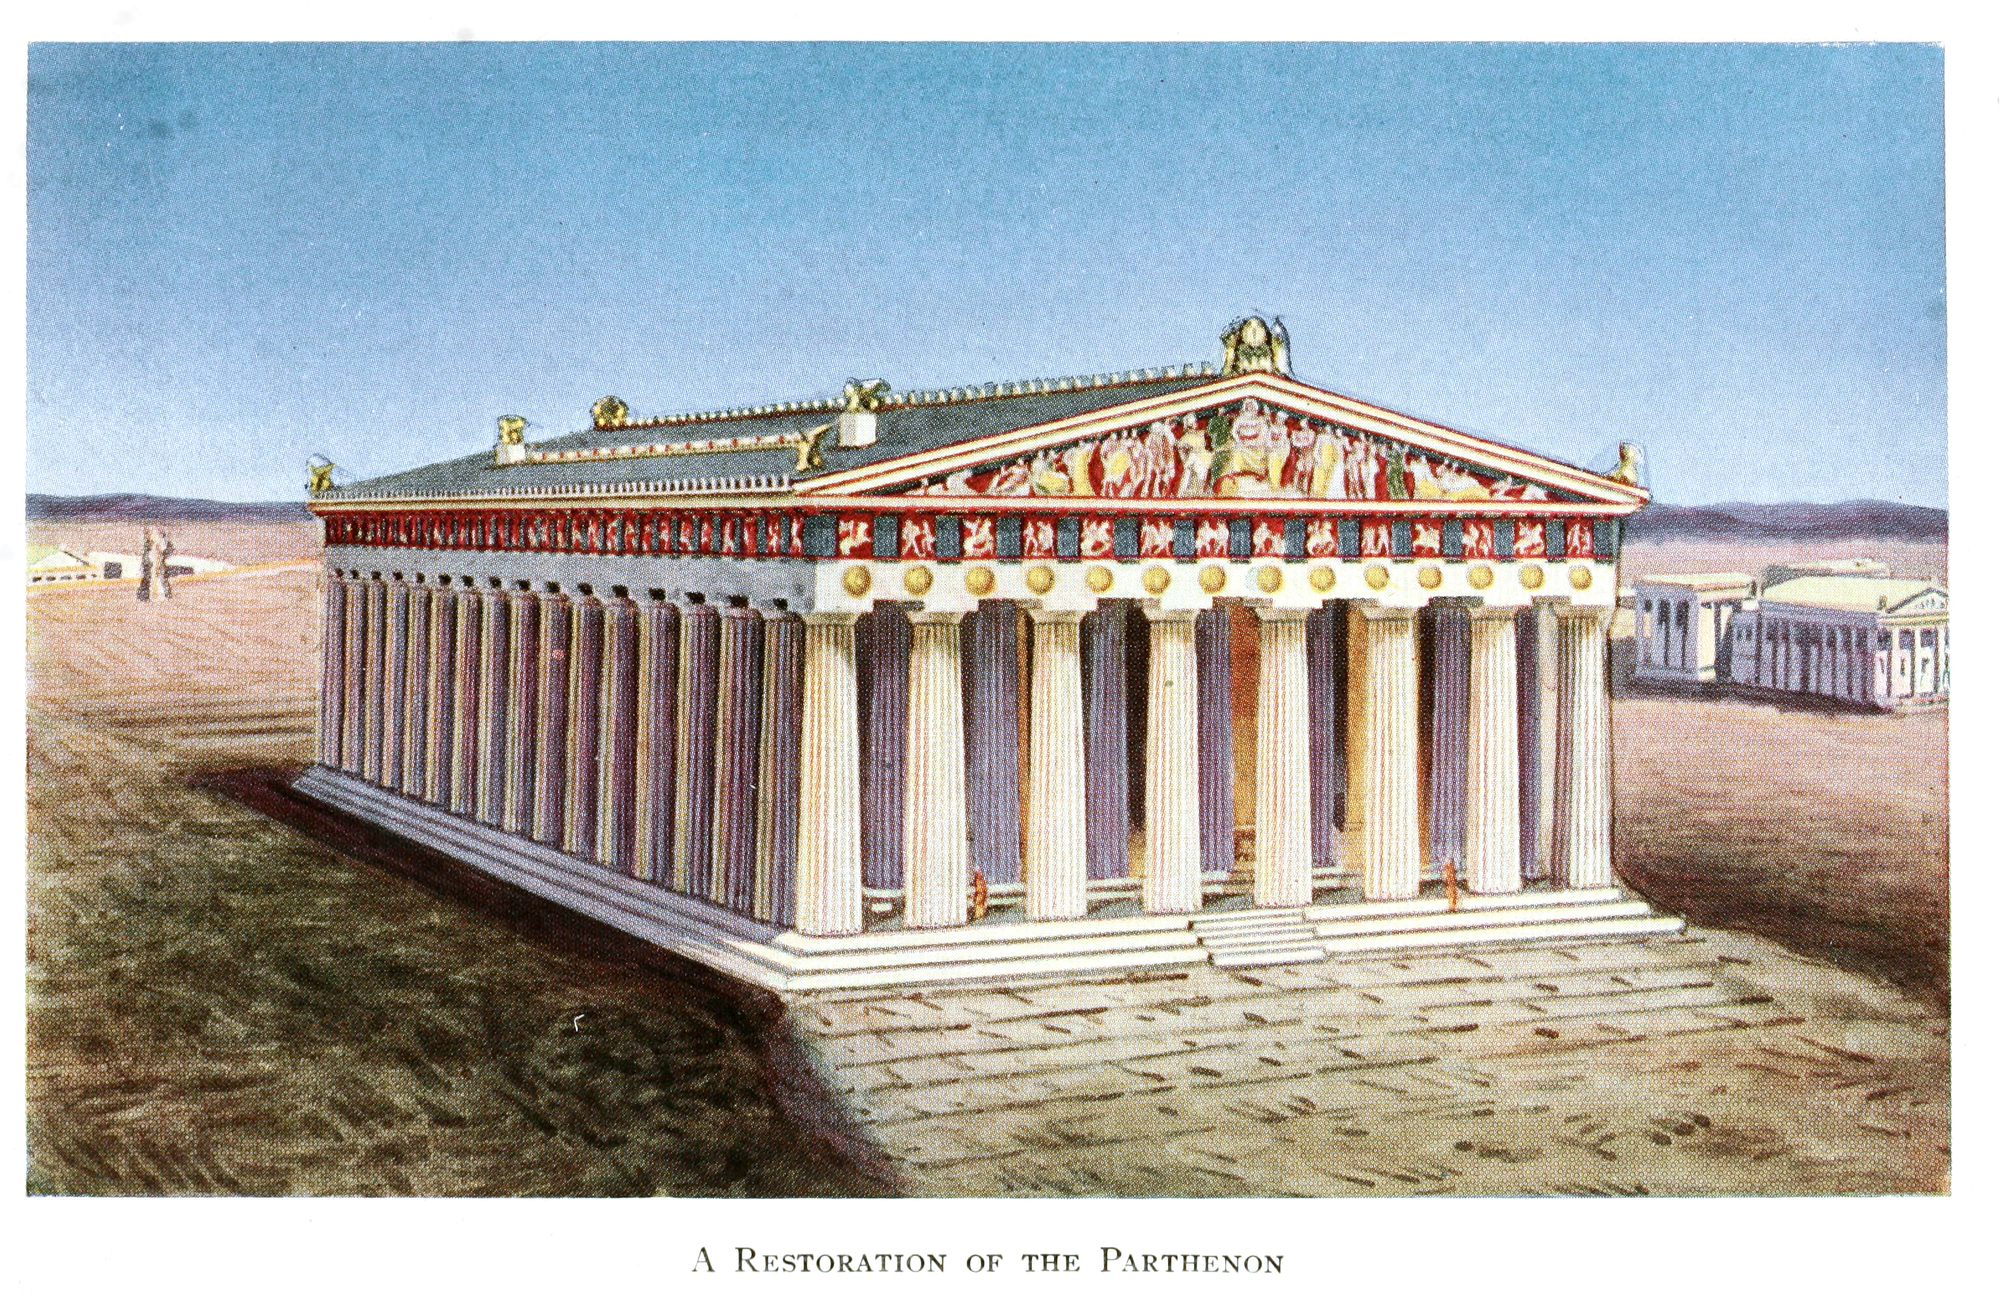 AD Classics: The Parthenon / Ictinus and Callicrates | ArchDaily